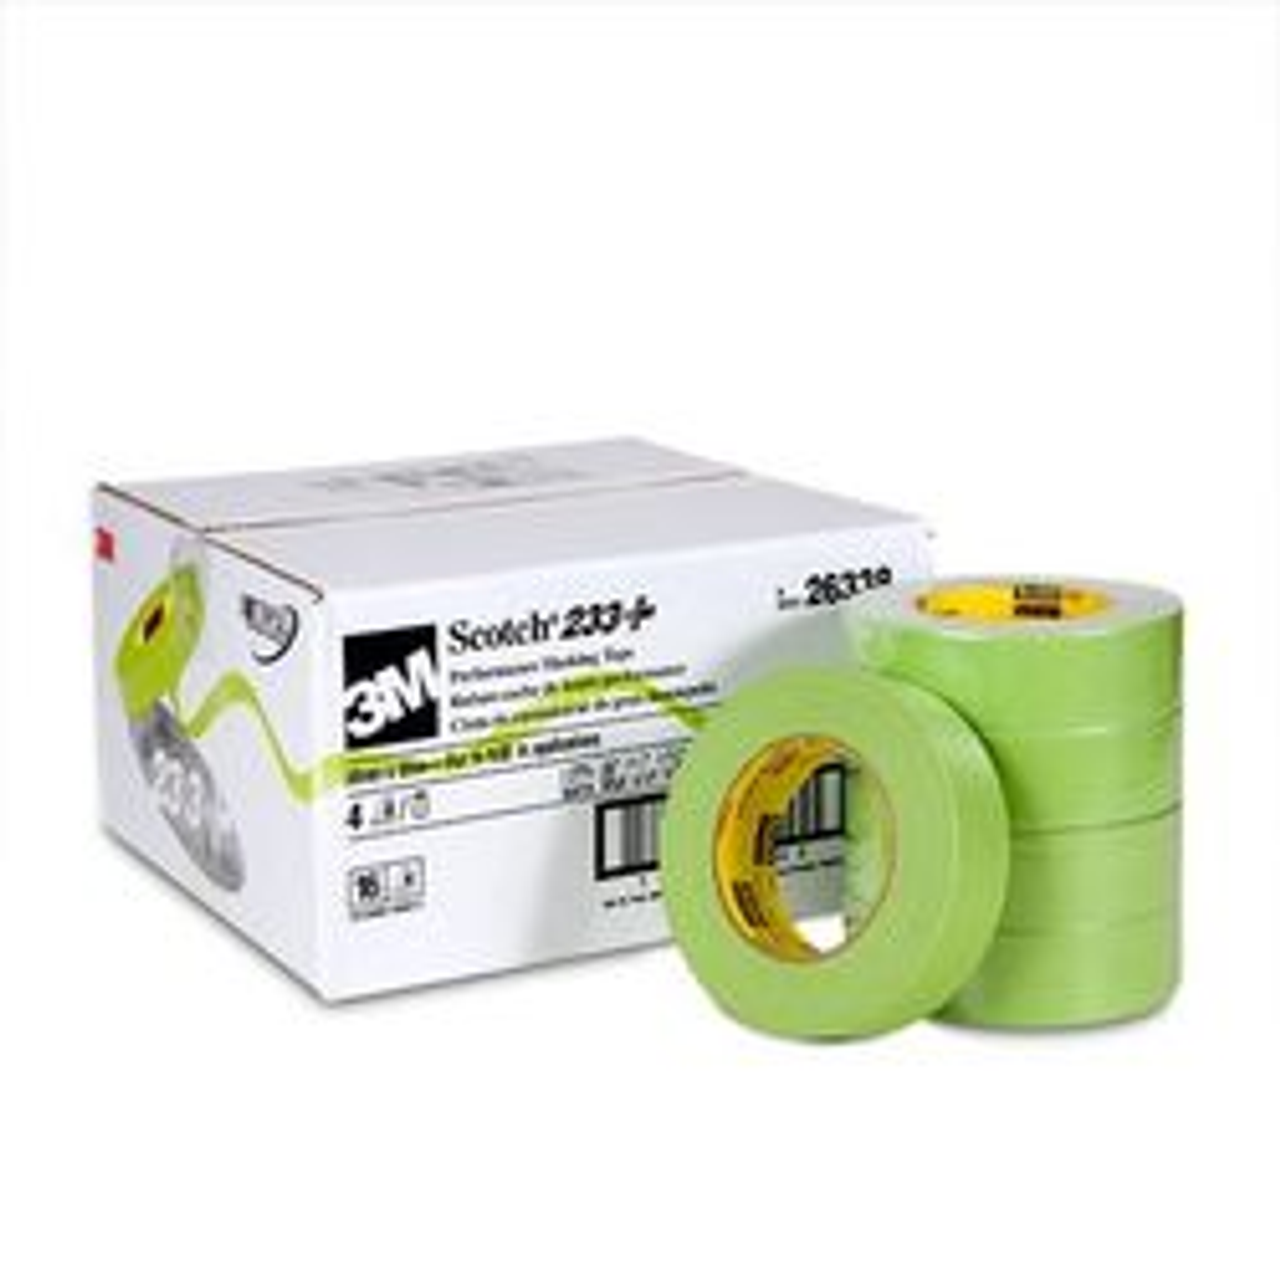 3M 26338 36mm x 55m Green Masking Tape (Roll)